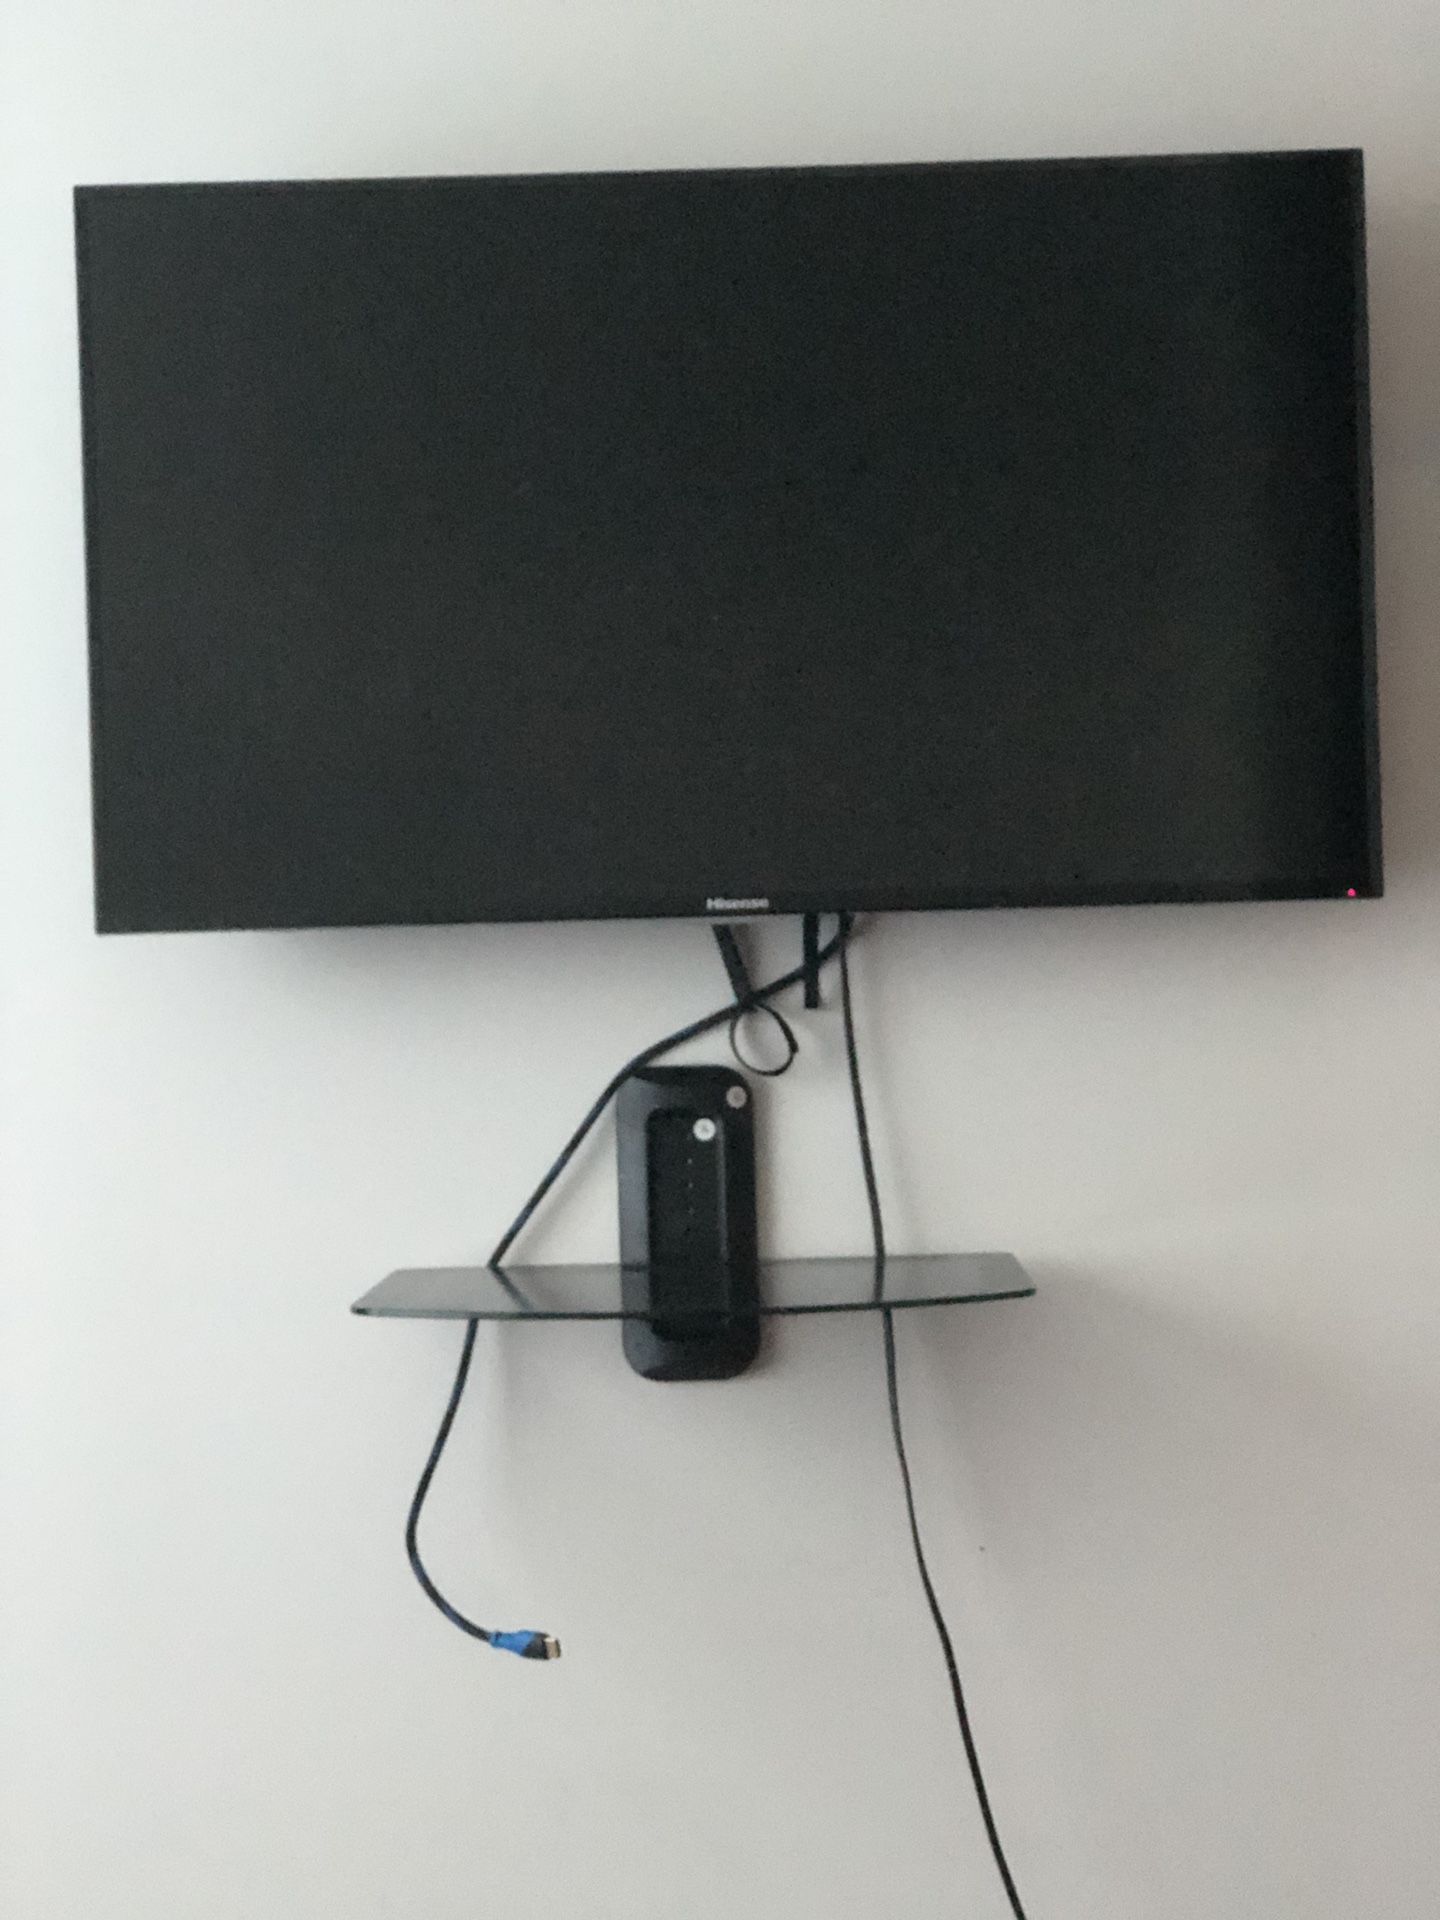 Hisense 32 inch smart TV